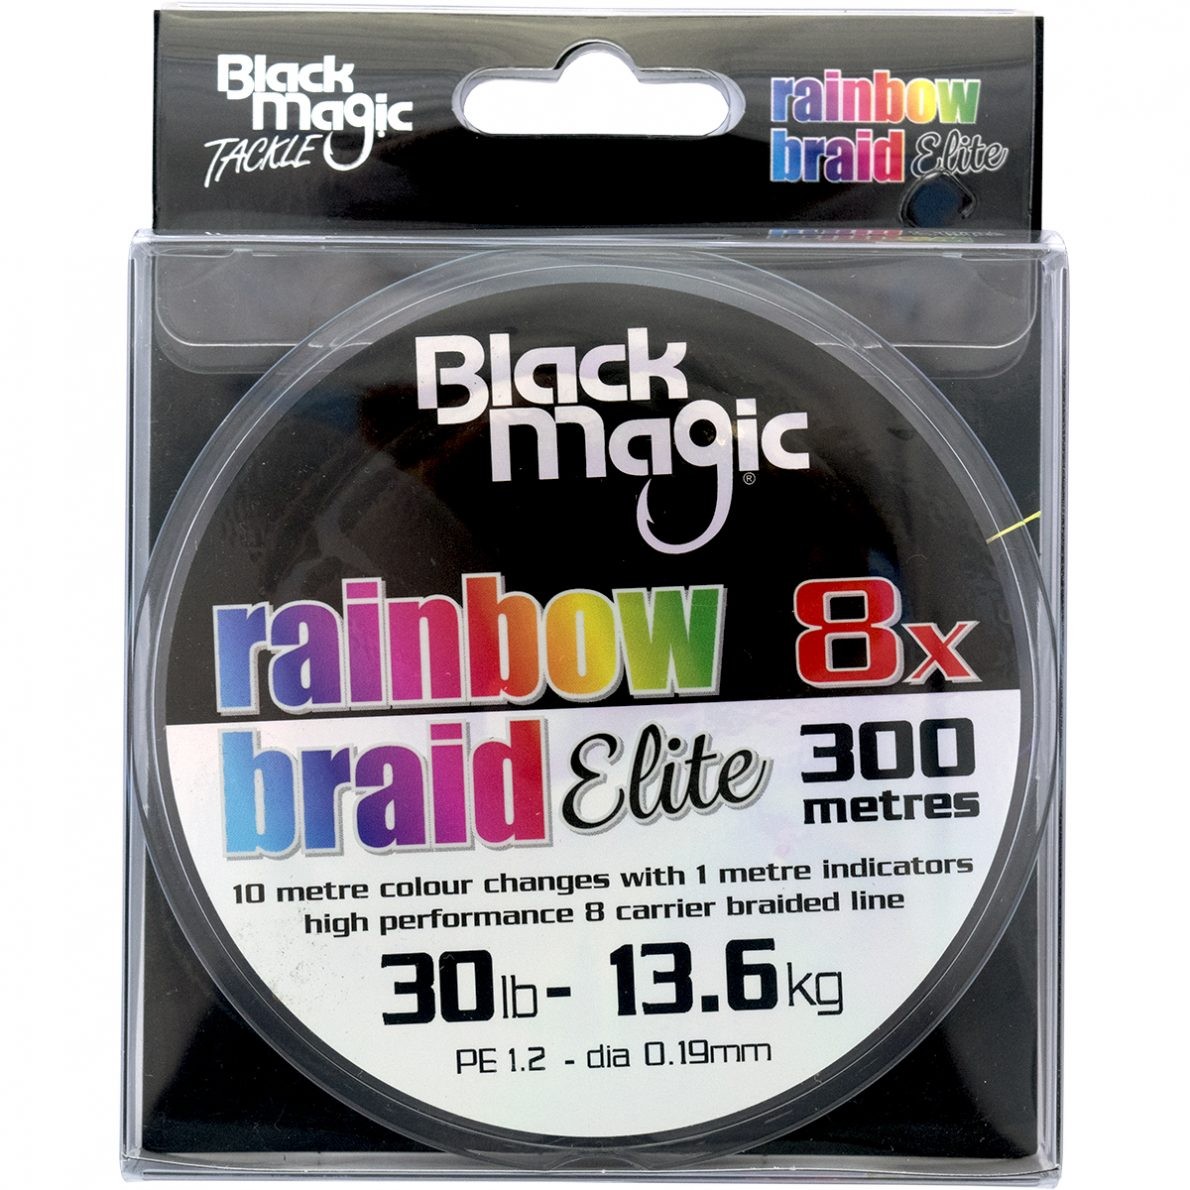 BLACK MAGIC TACKLE RAINBOW BRAID ELITE 8X-30LB-300M - My Mates Outdoors